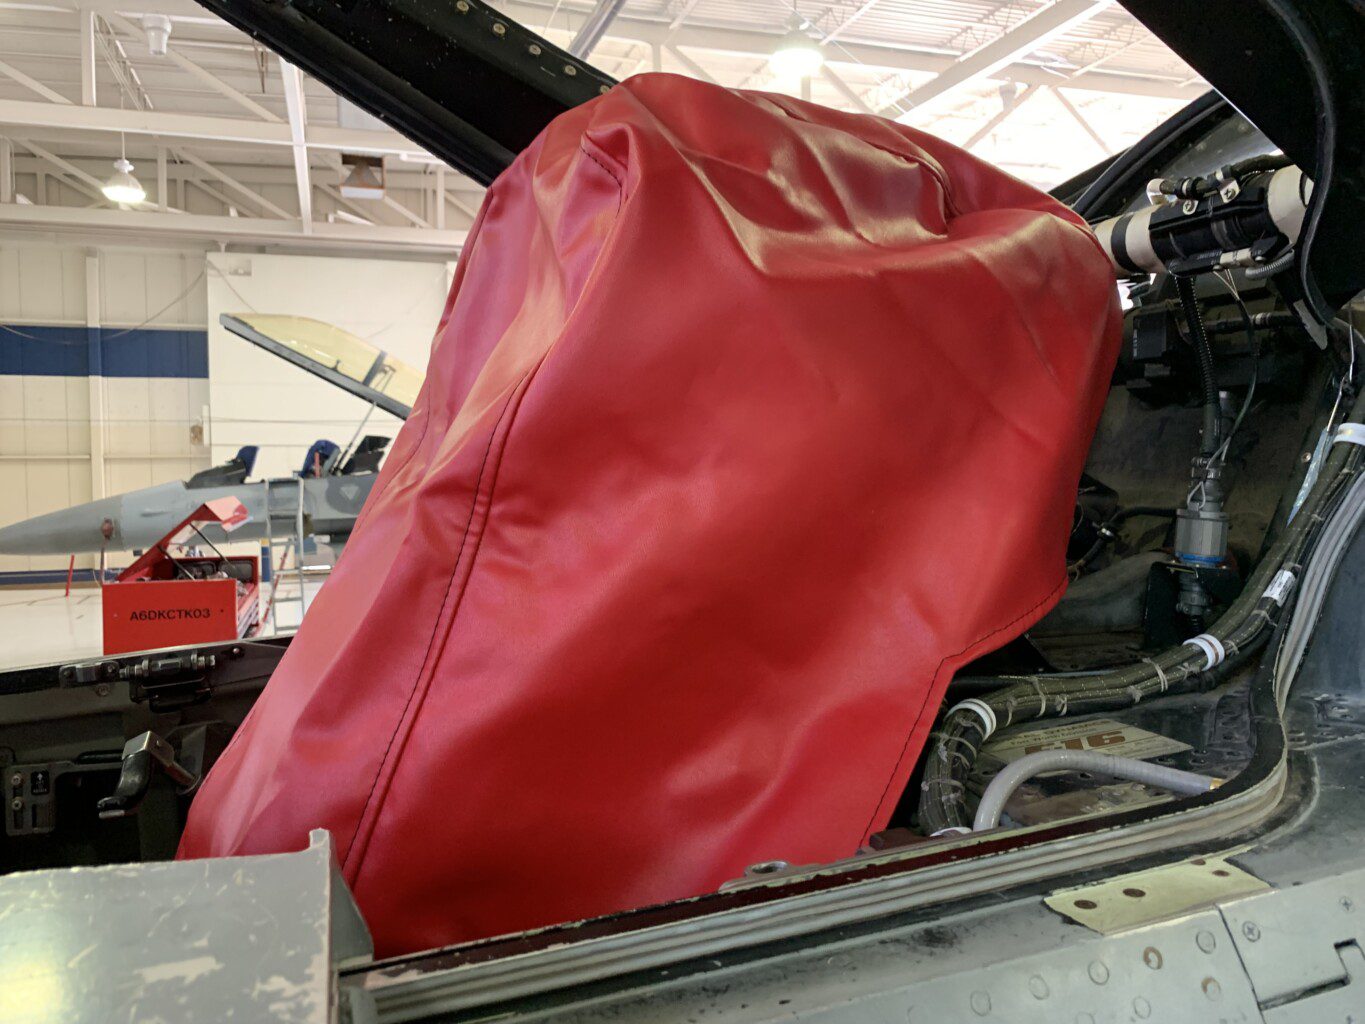 F16 Pilot seat